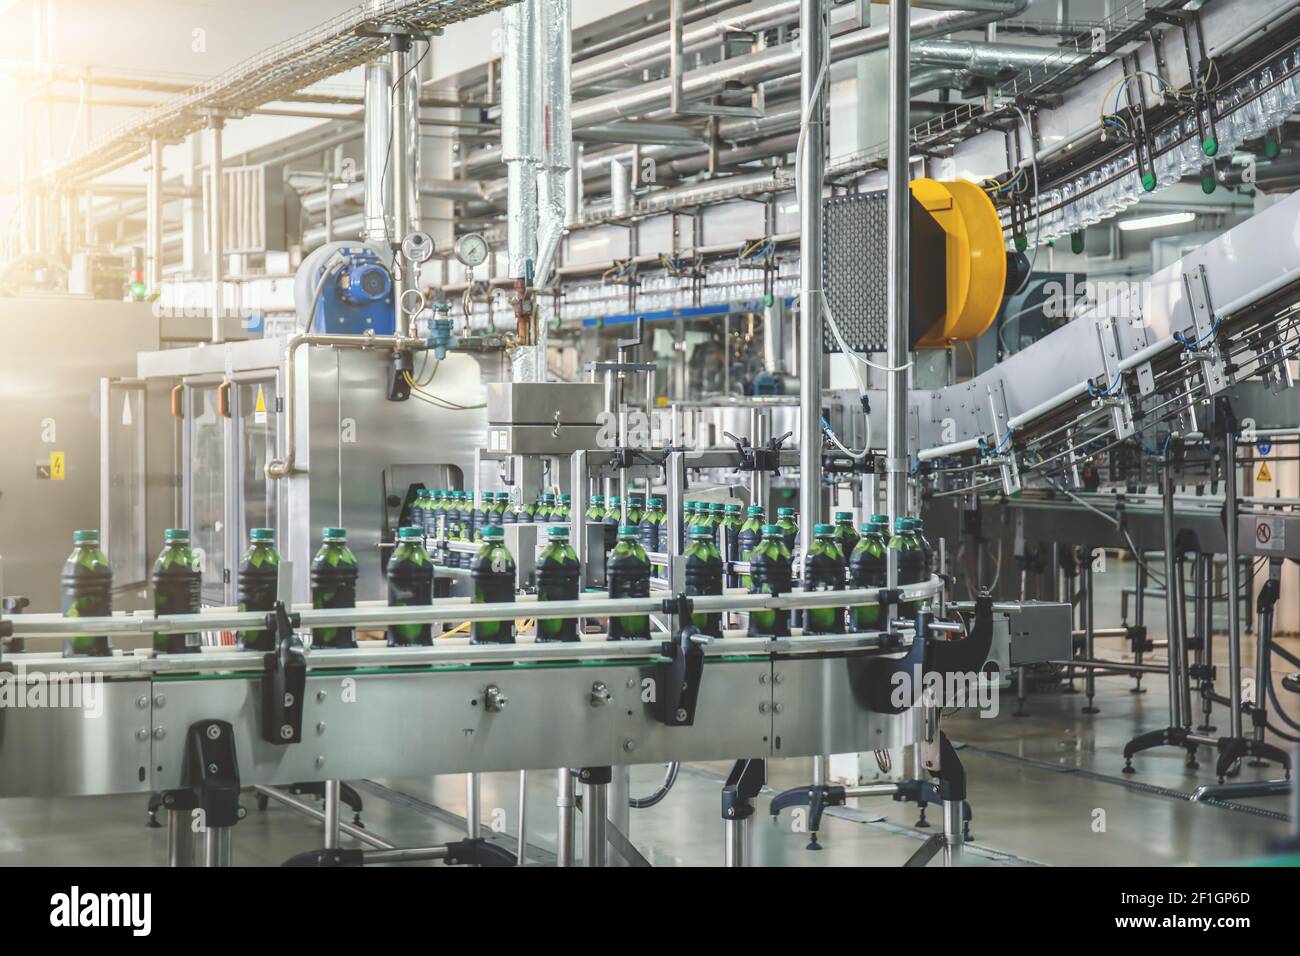 Conveyor belt with juice in bottles, Beverage factory, production line process. Stock Photo